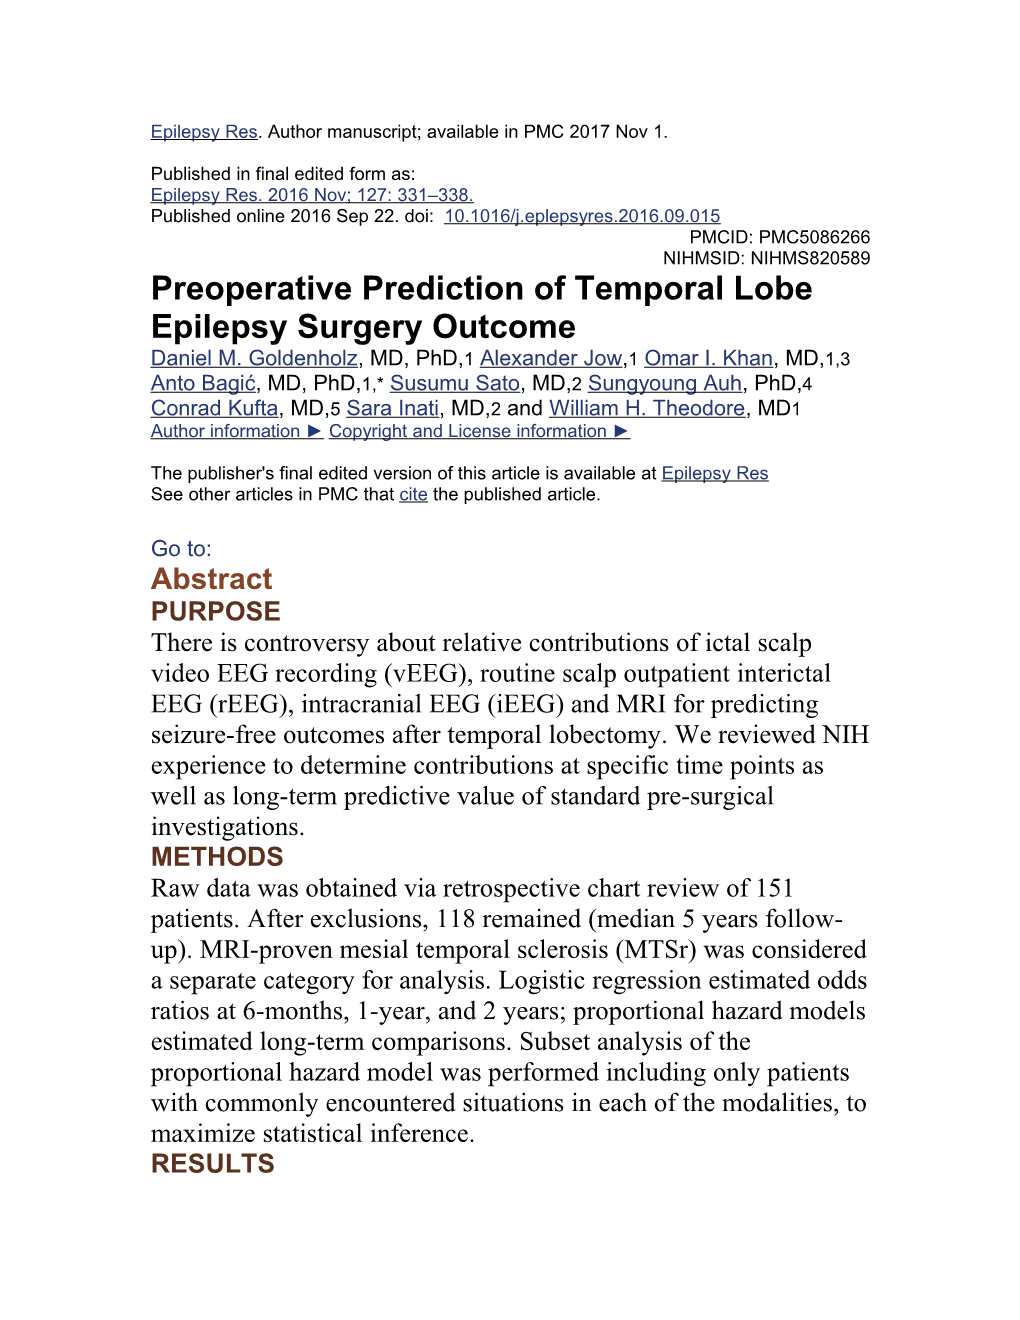 Preoperative Prediction of Temporal Lobe Epilepsy Surgery Outcome